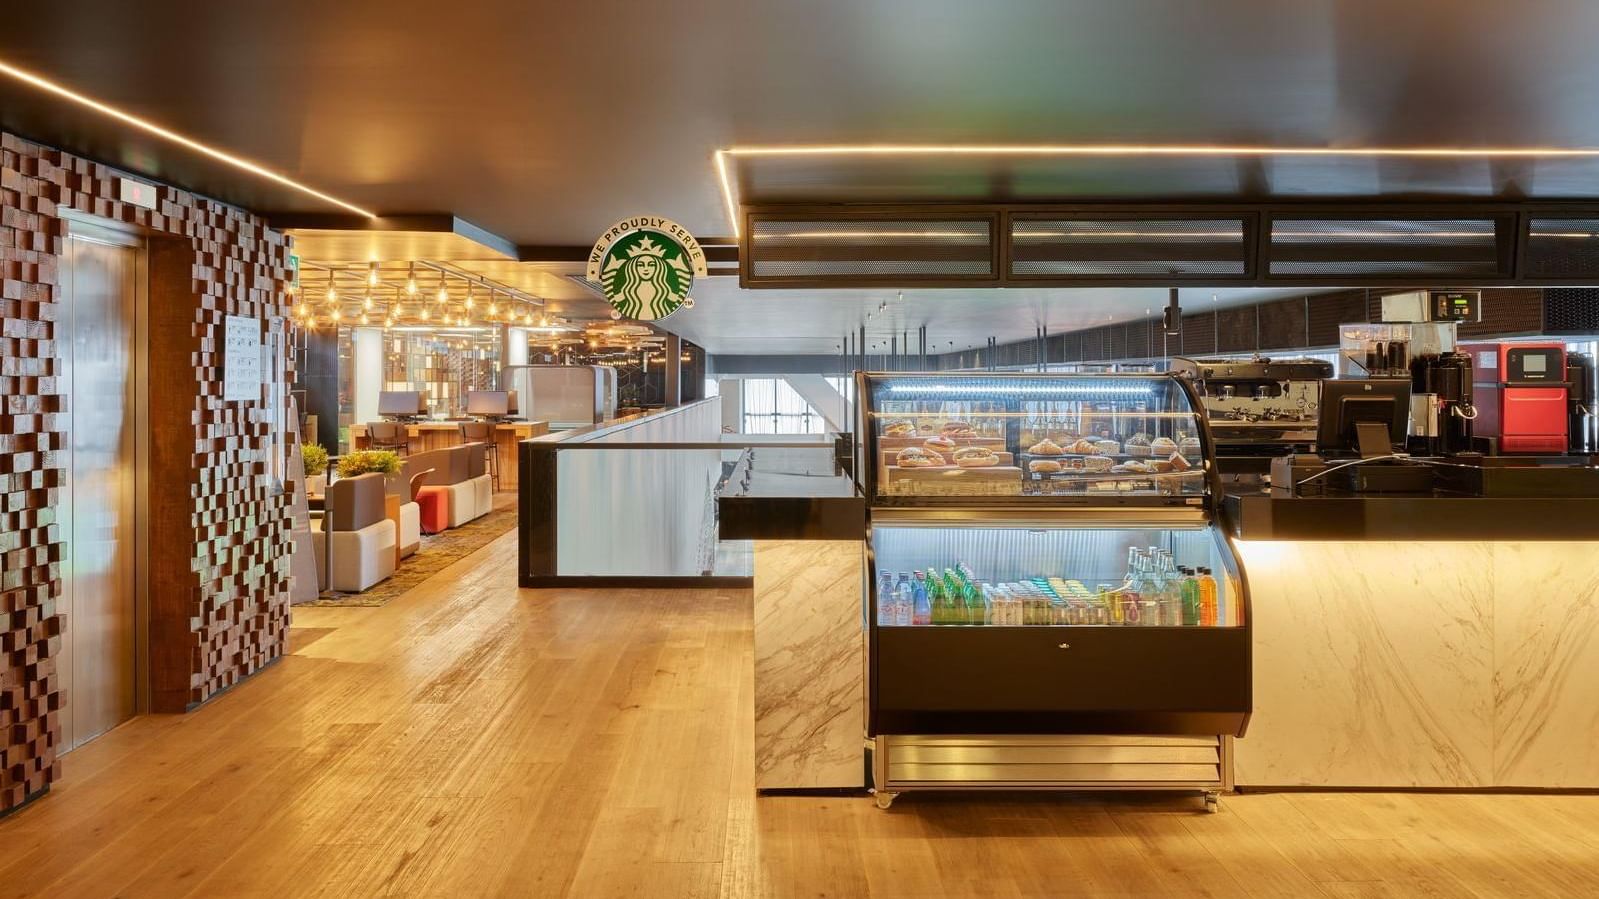 Interior of the Starbucks Coffee Shop at FA Viaducto Aeropuerto